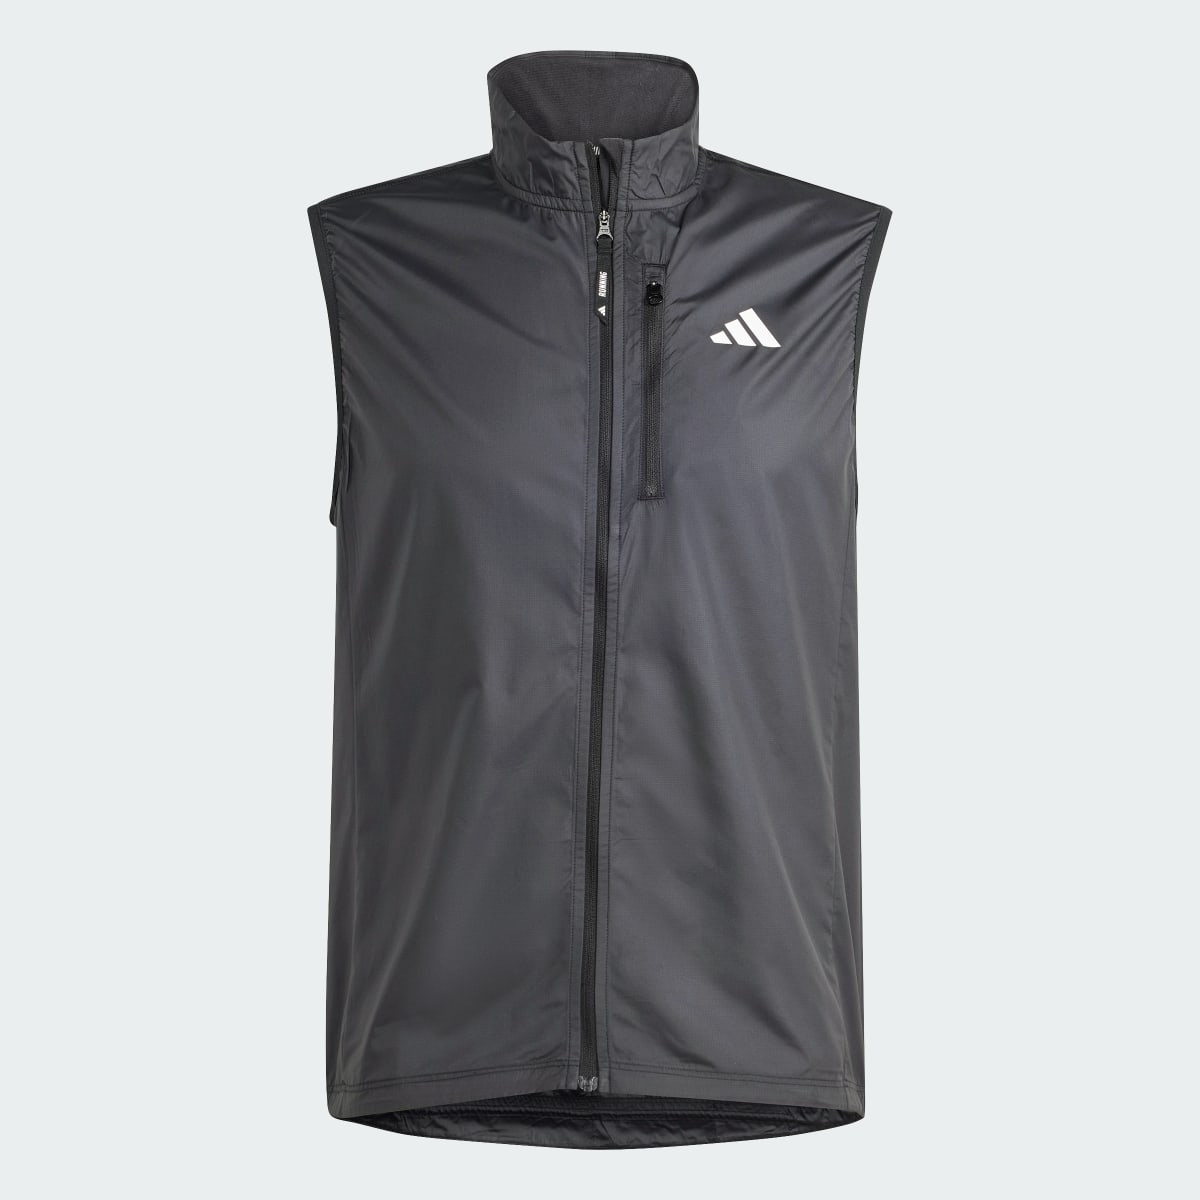 Adidas Own the Run Vest. 5